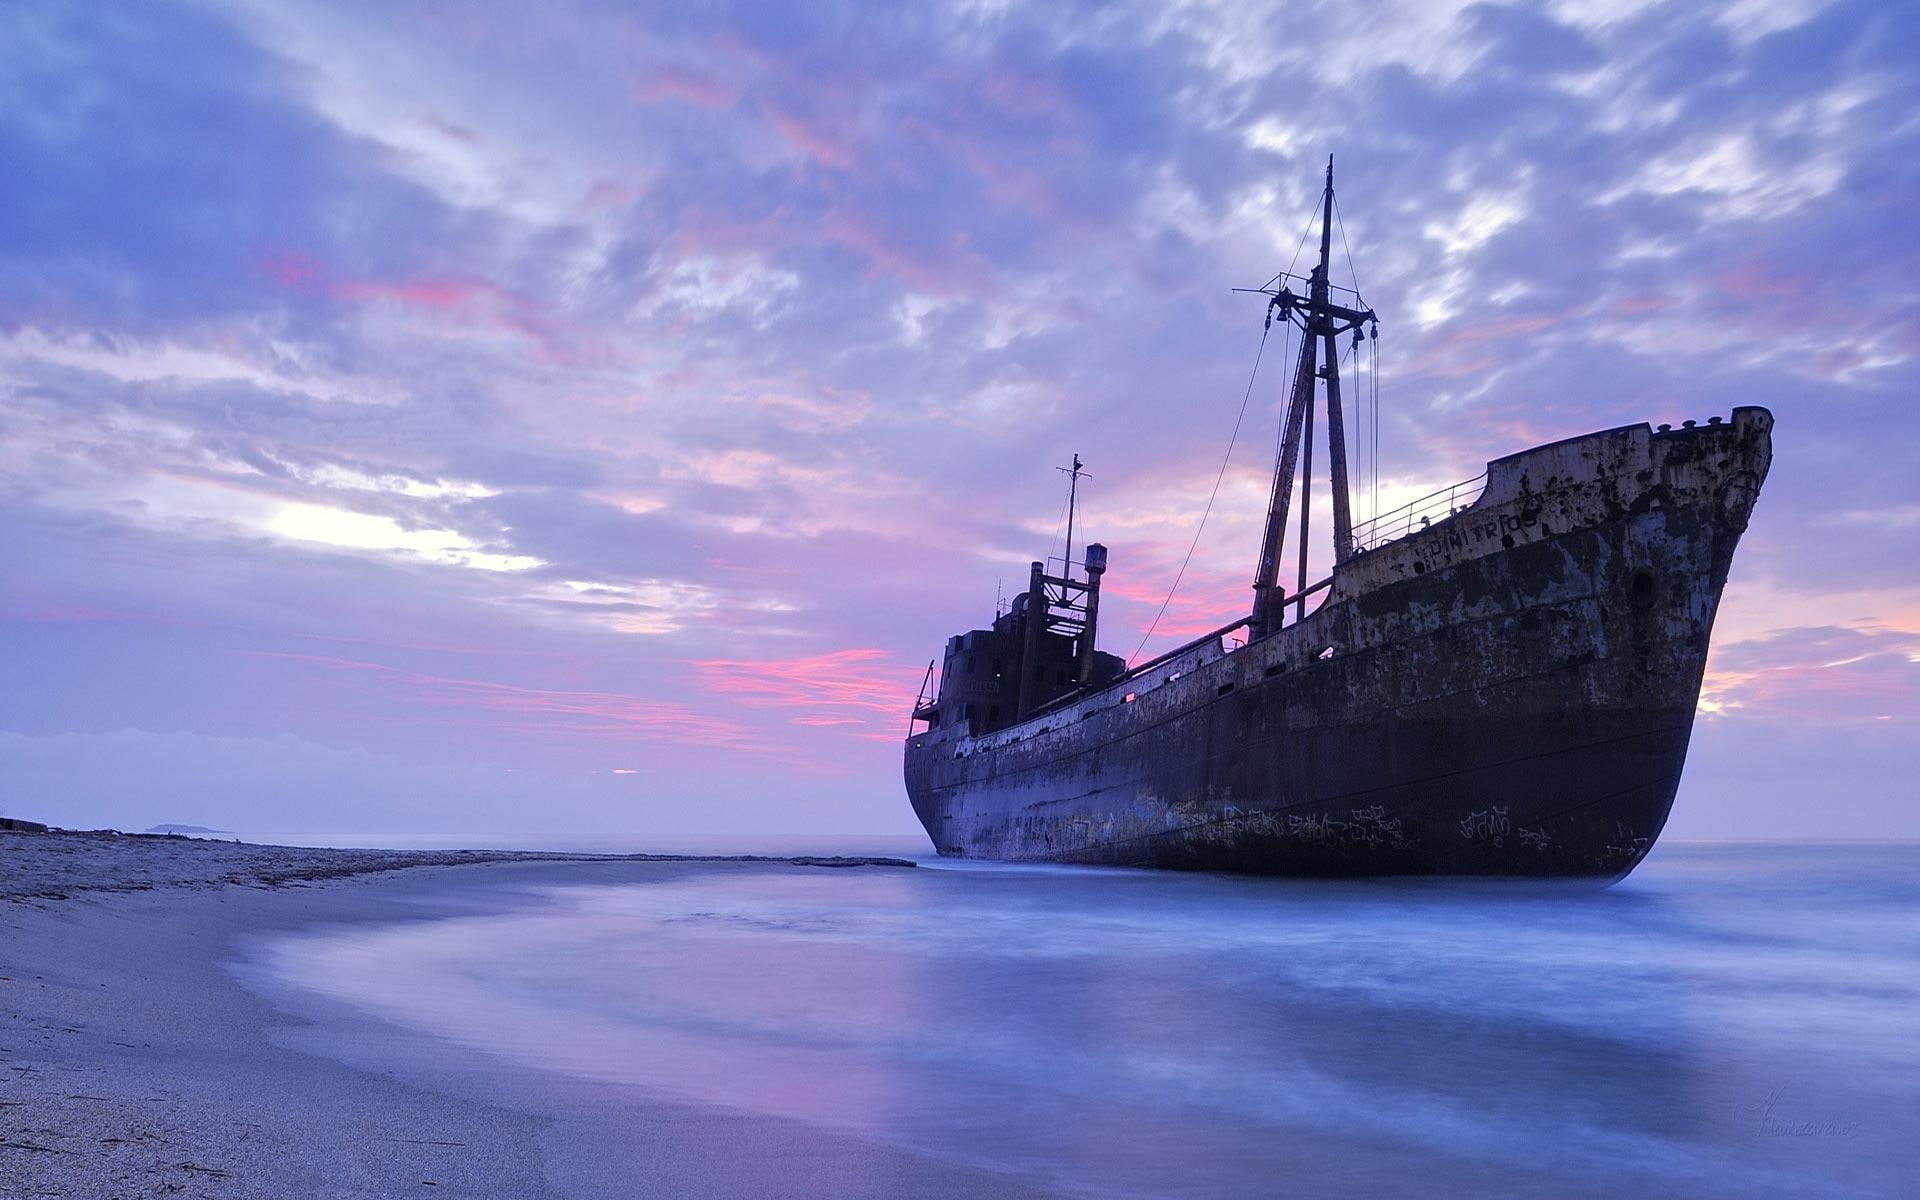 Aboned Ship, vehicle, beach, water, ocean, blue, boats